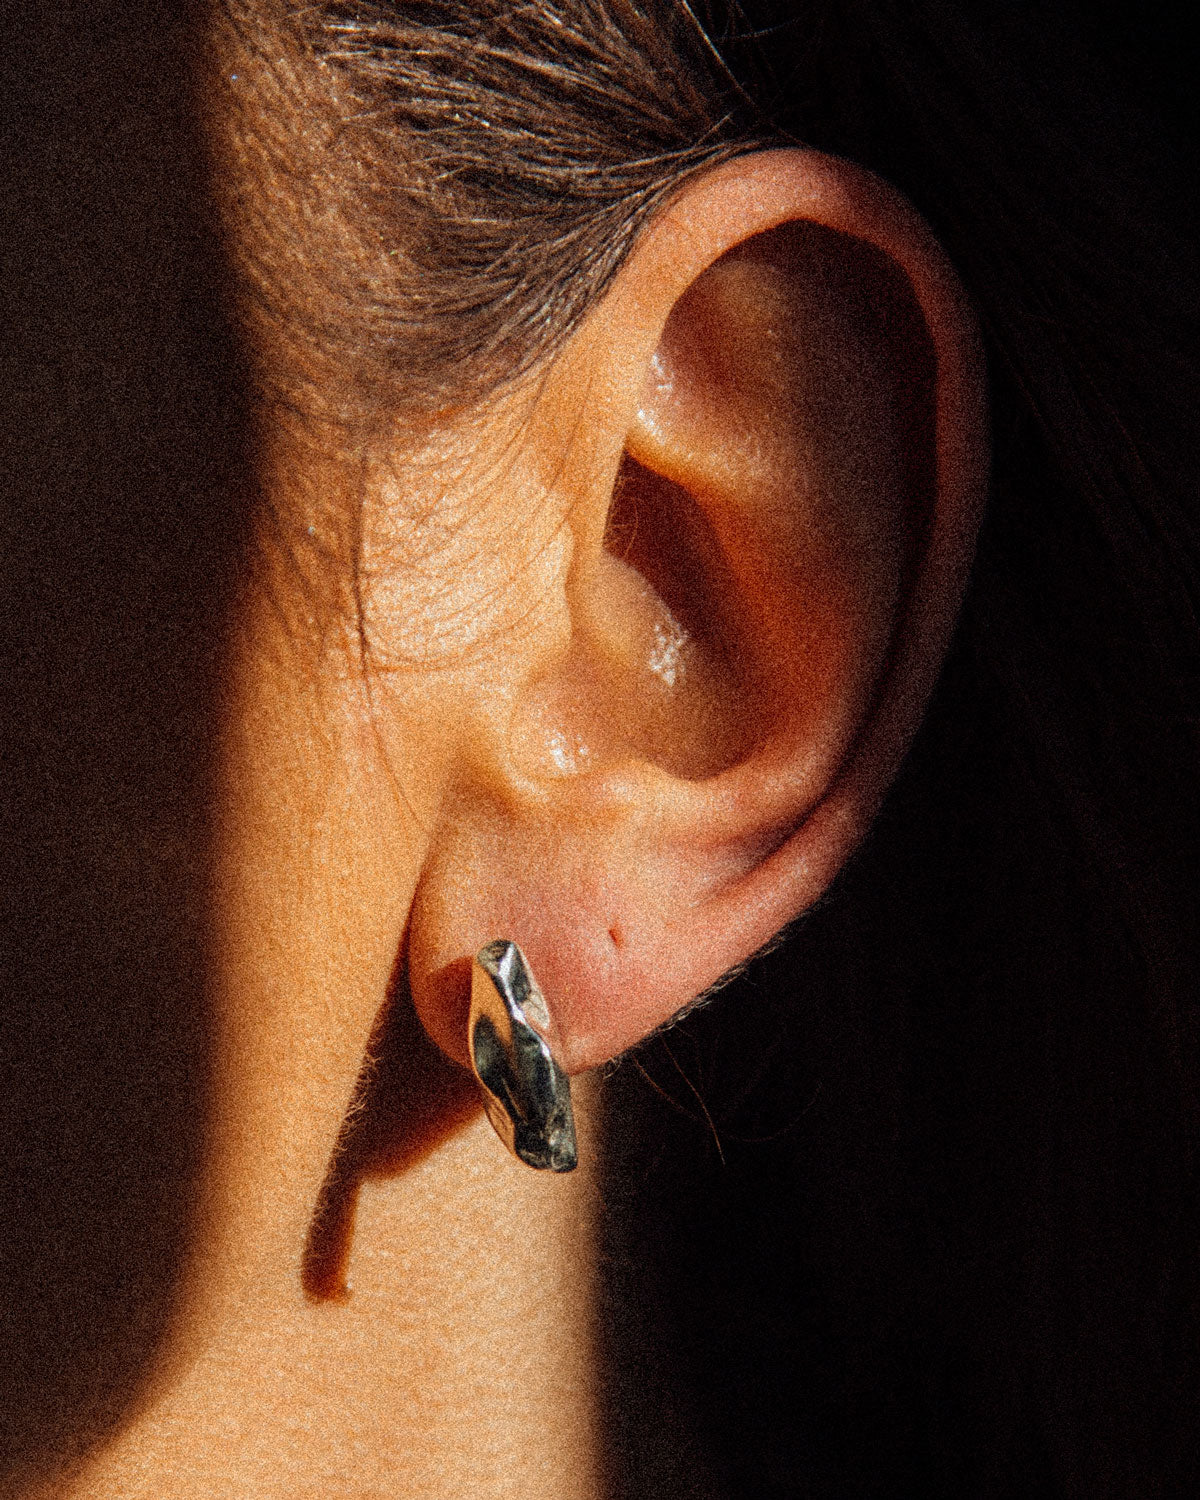 organic shaped hypoallergenic stud earring